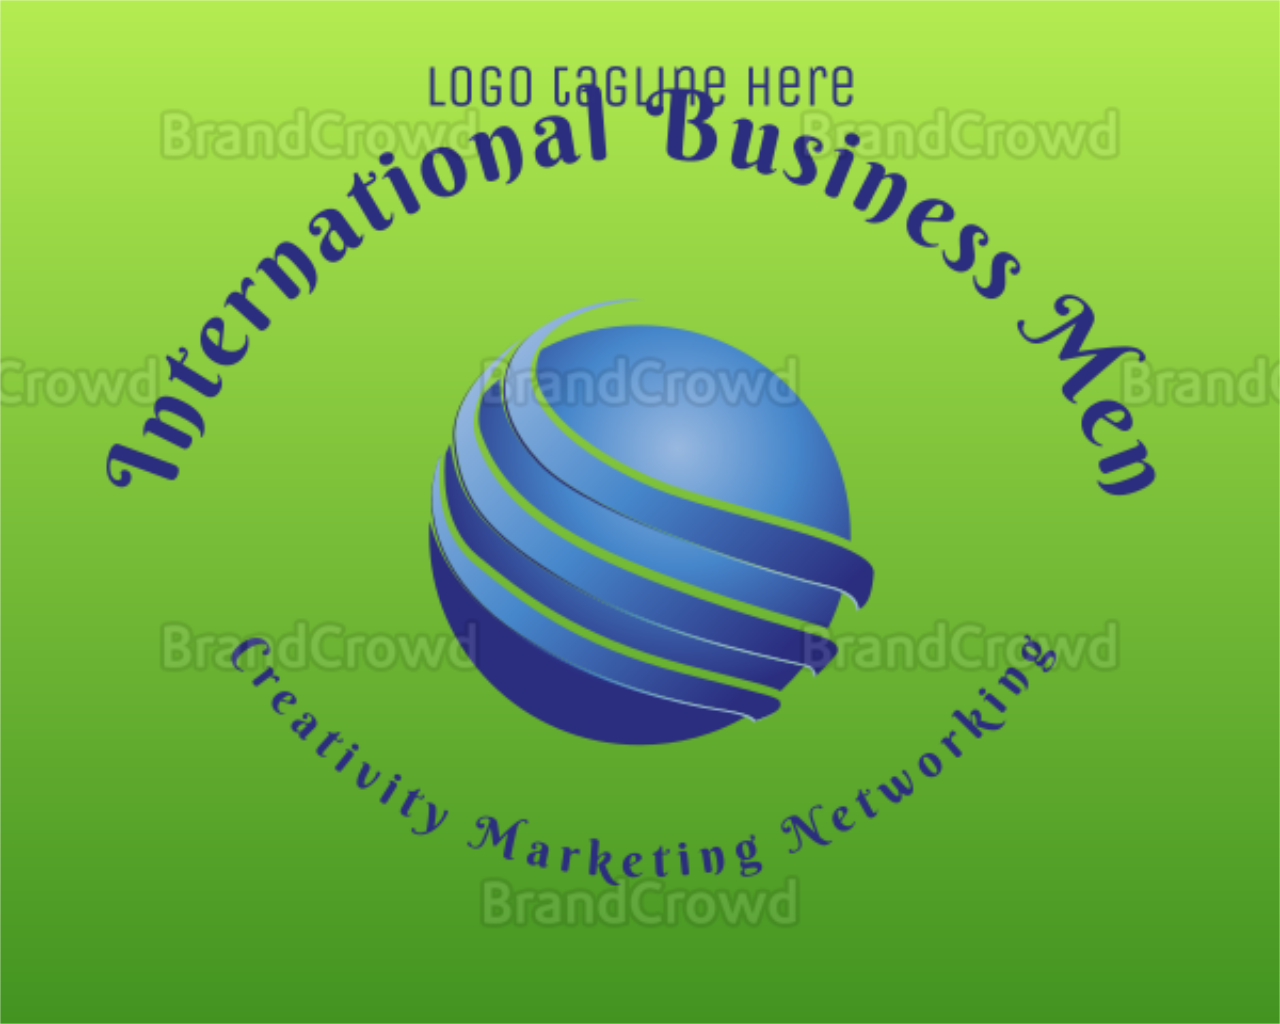 International Business Men's web page